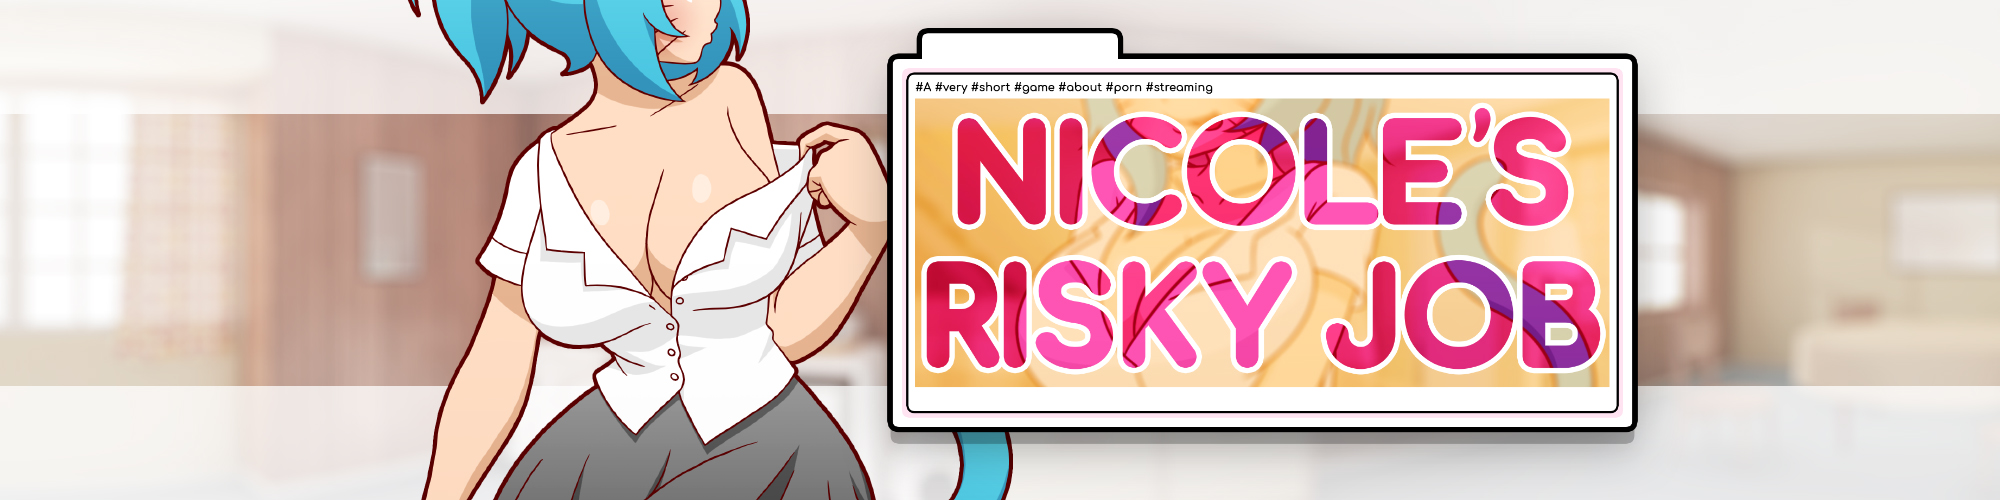 Nicoles risky job gallery